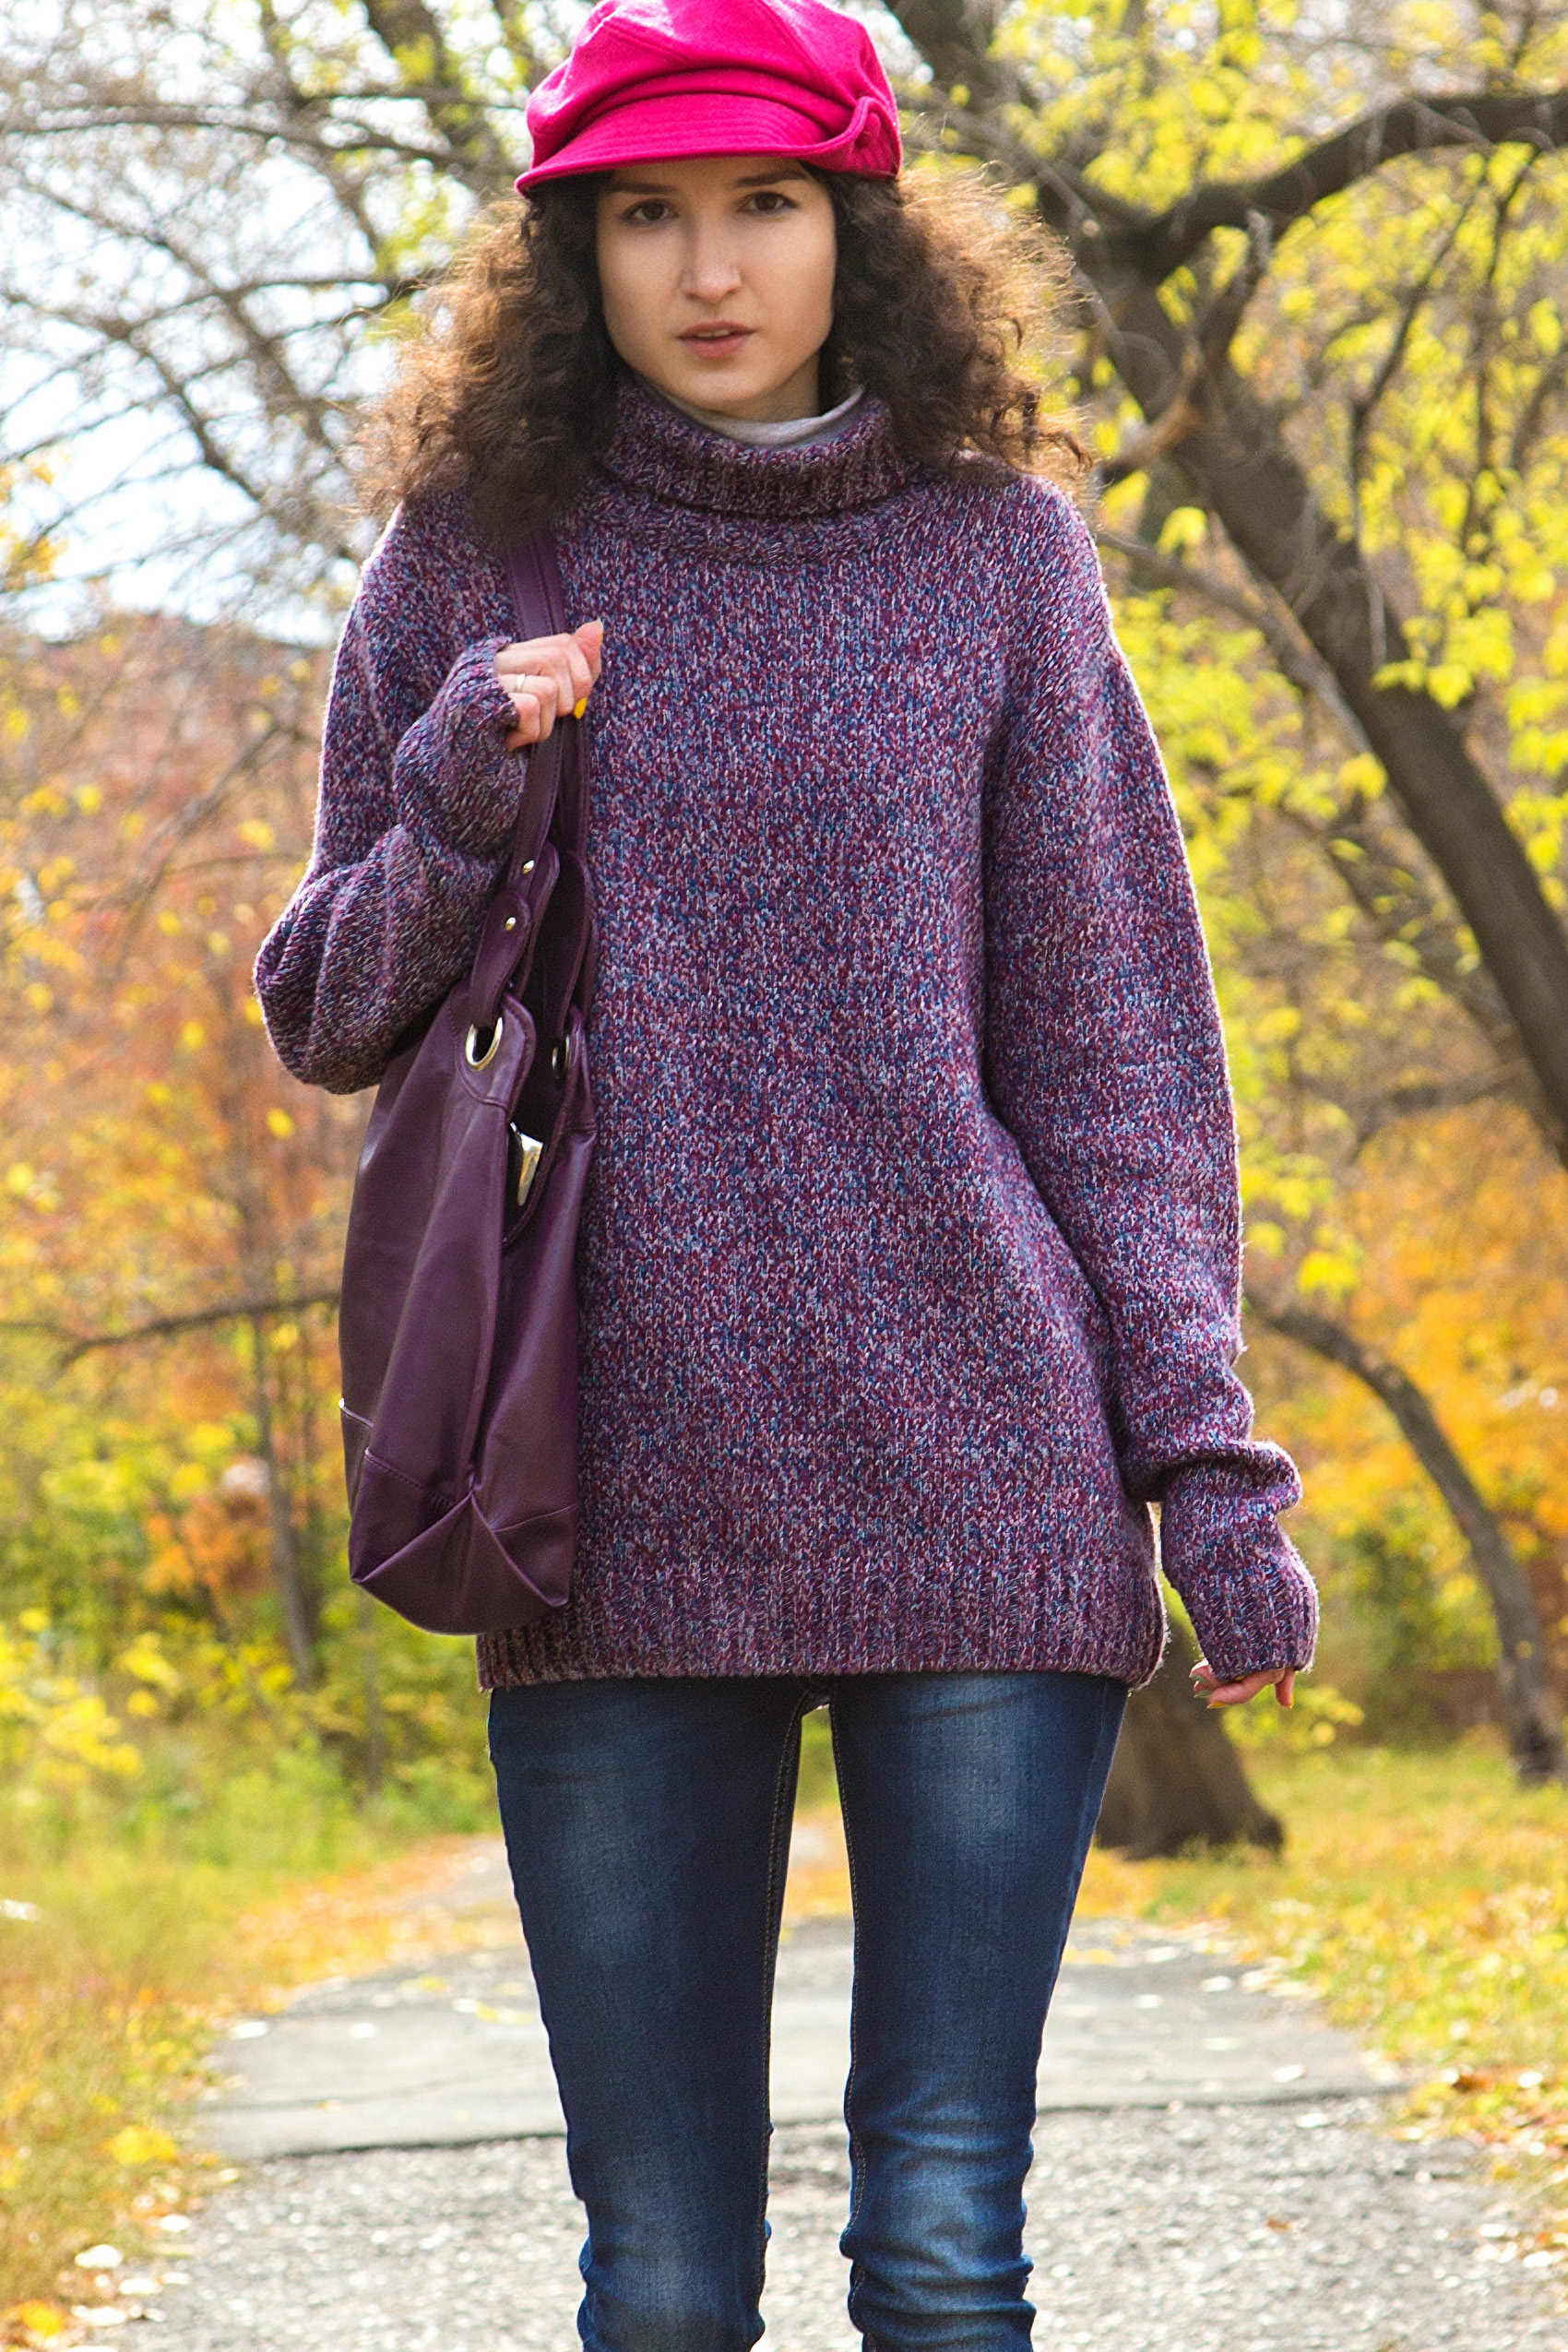 model wearing purple sweater with blue jeans